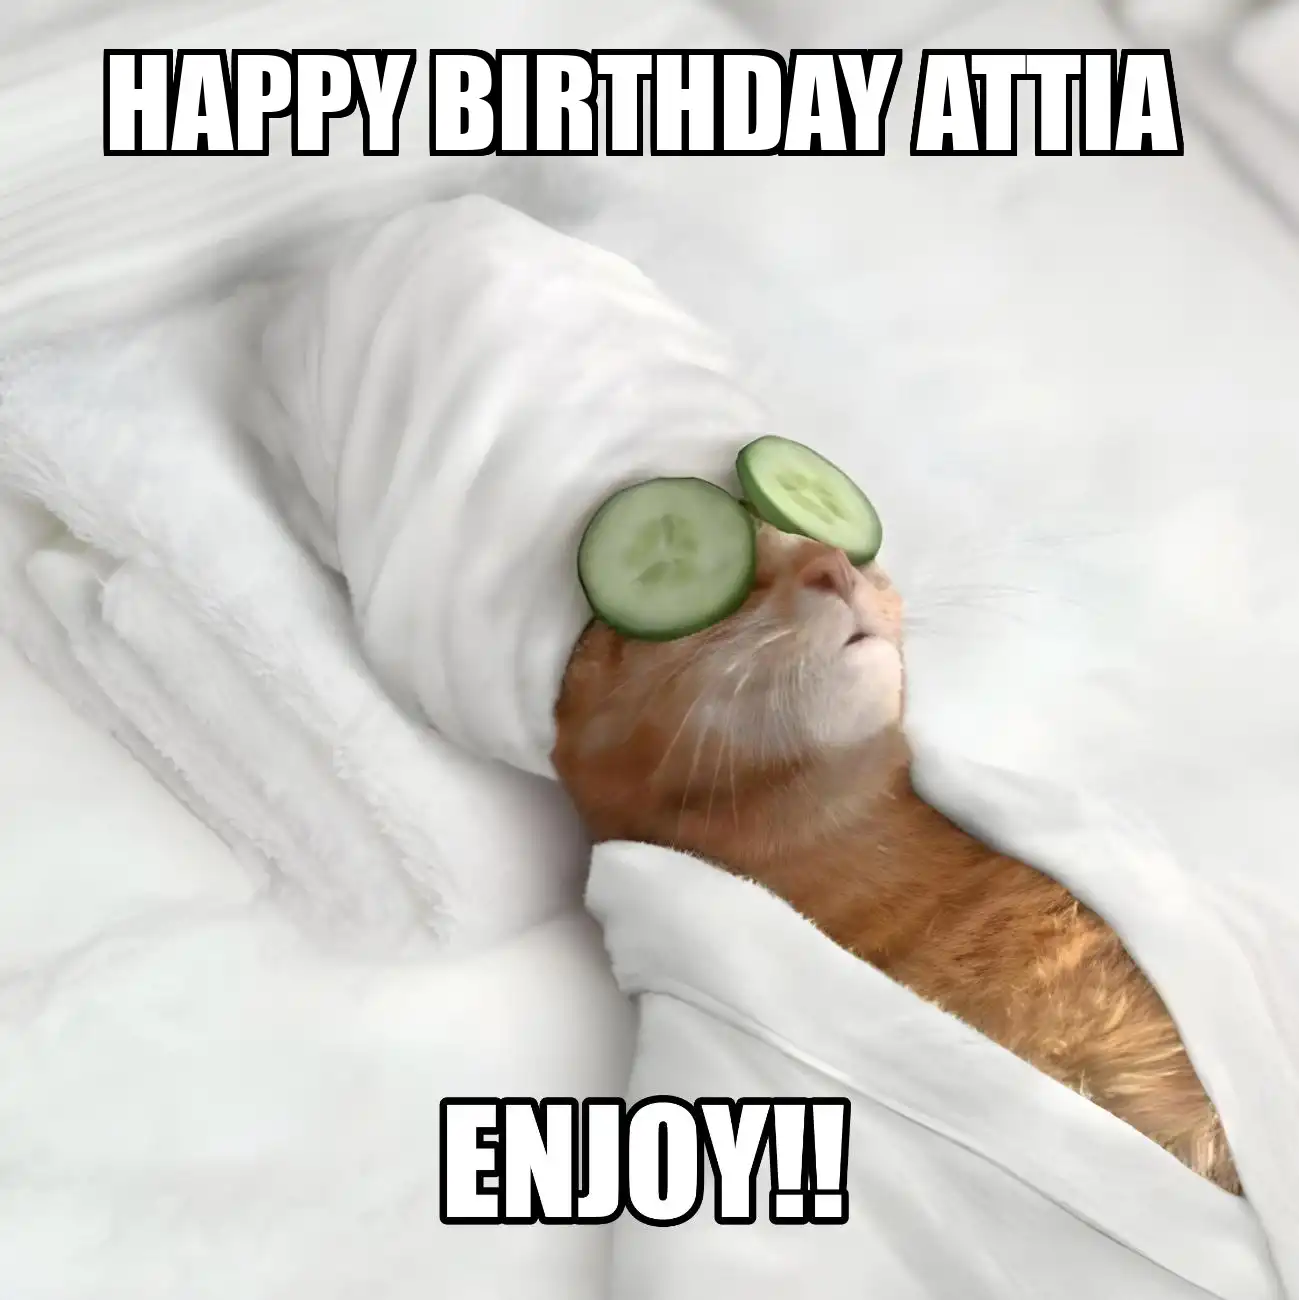 Happy Birthday Attia Enjoy Cat Meme